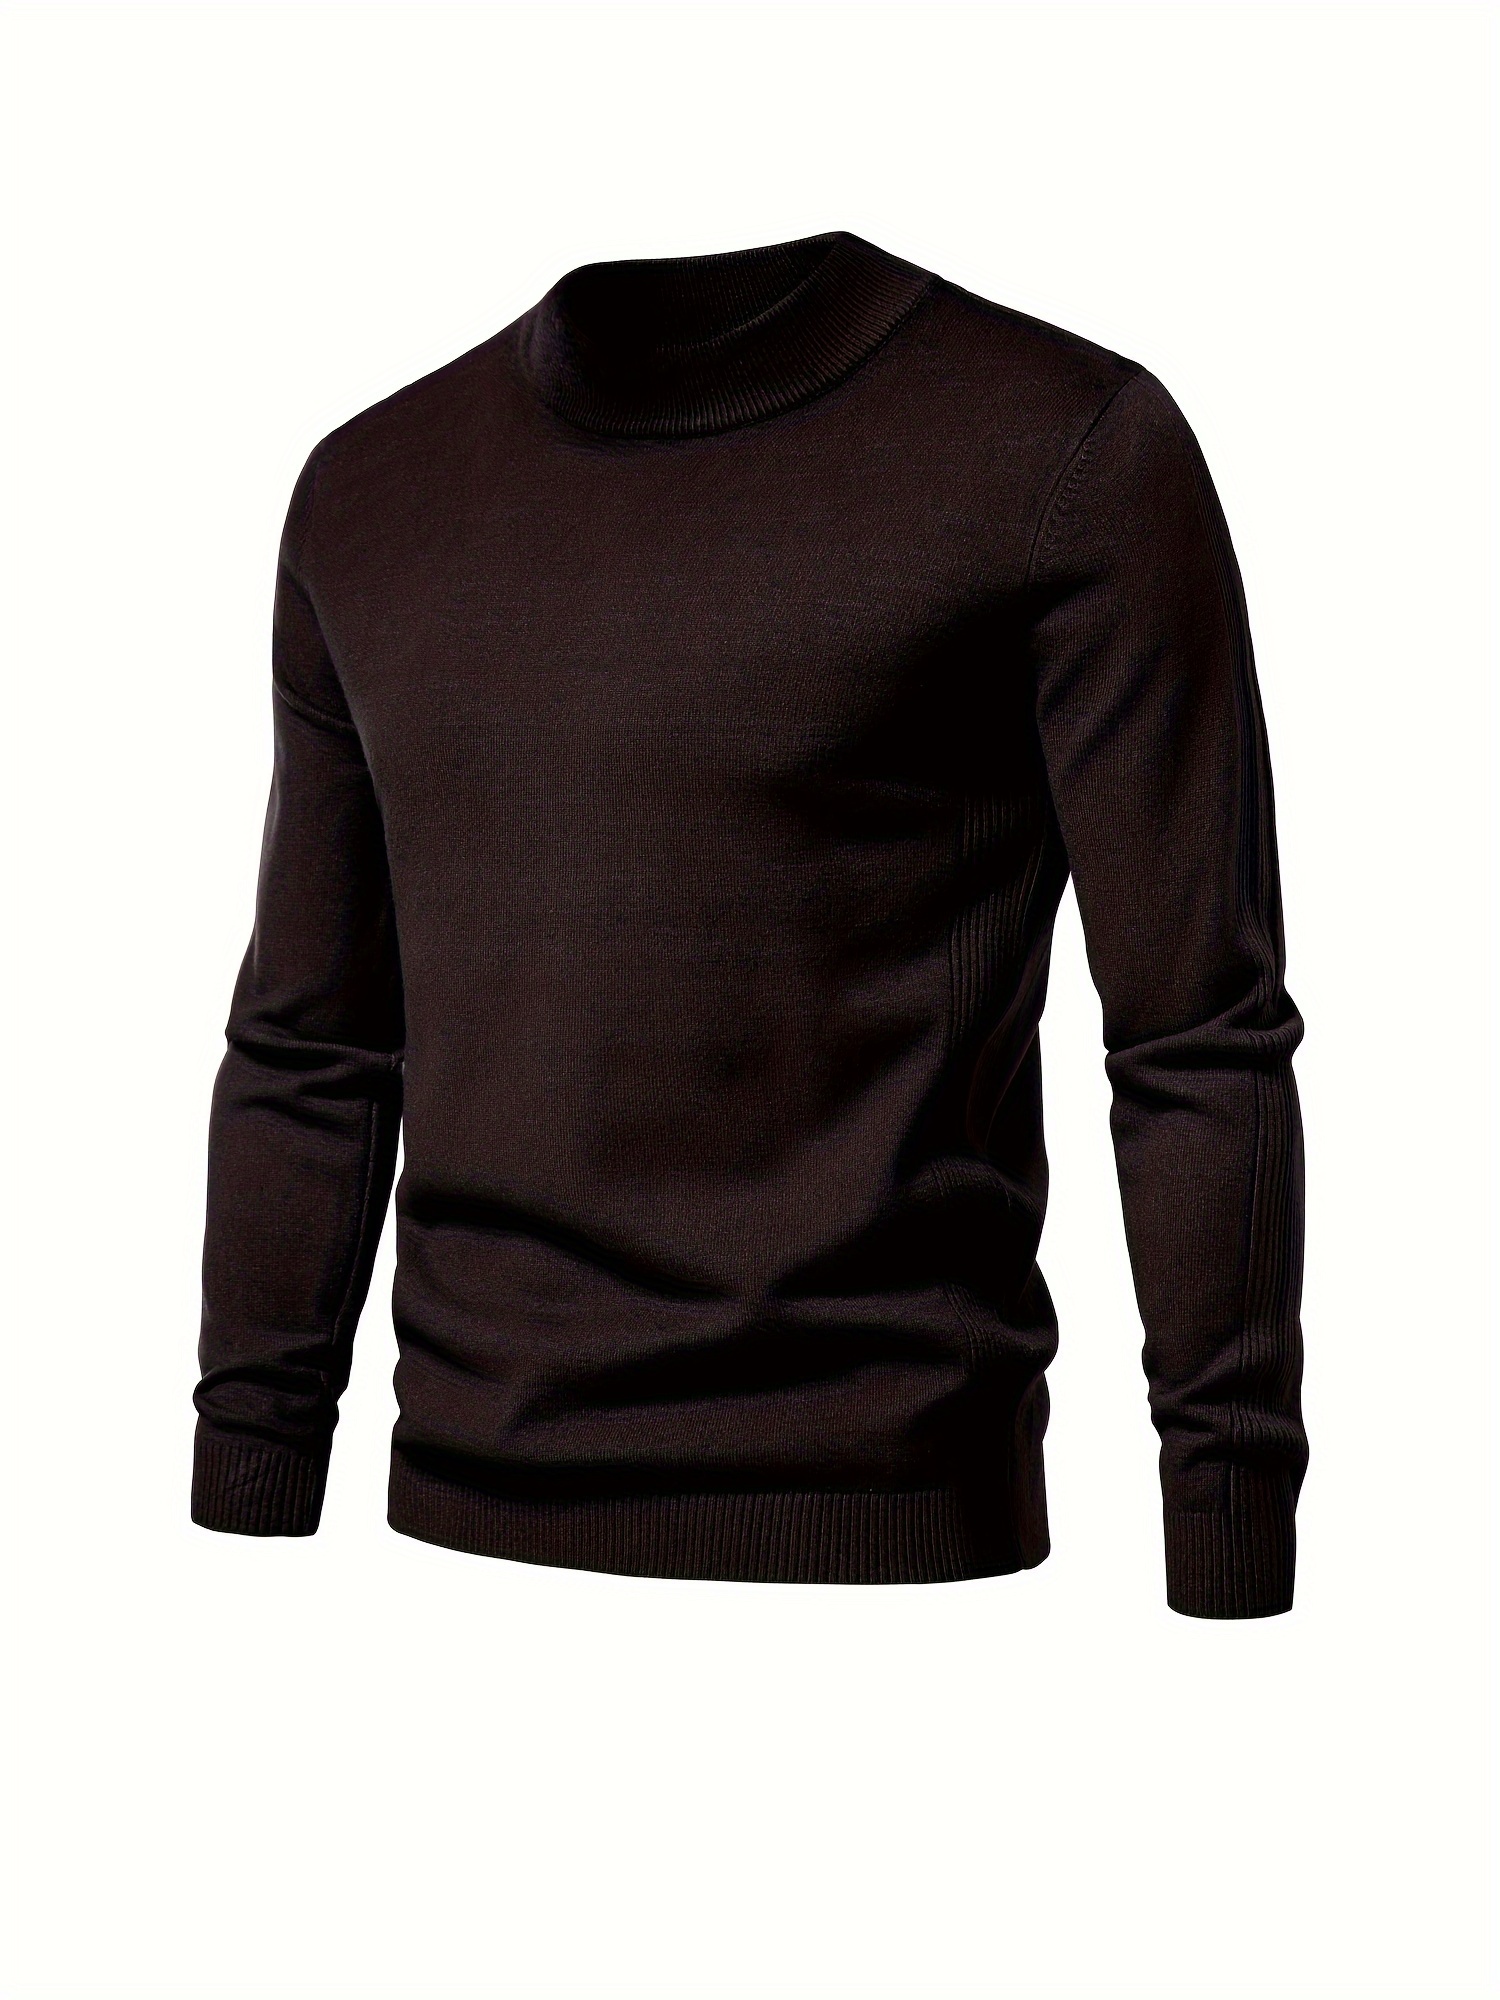 Suéter para hombre, sin mangas, cuello en V, suéter de punto para invierno,  color gris oscuro, talla XL, Gris-oscuro